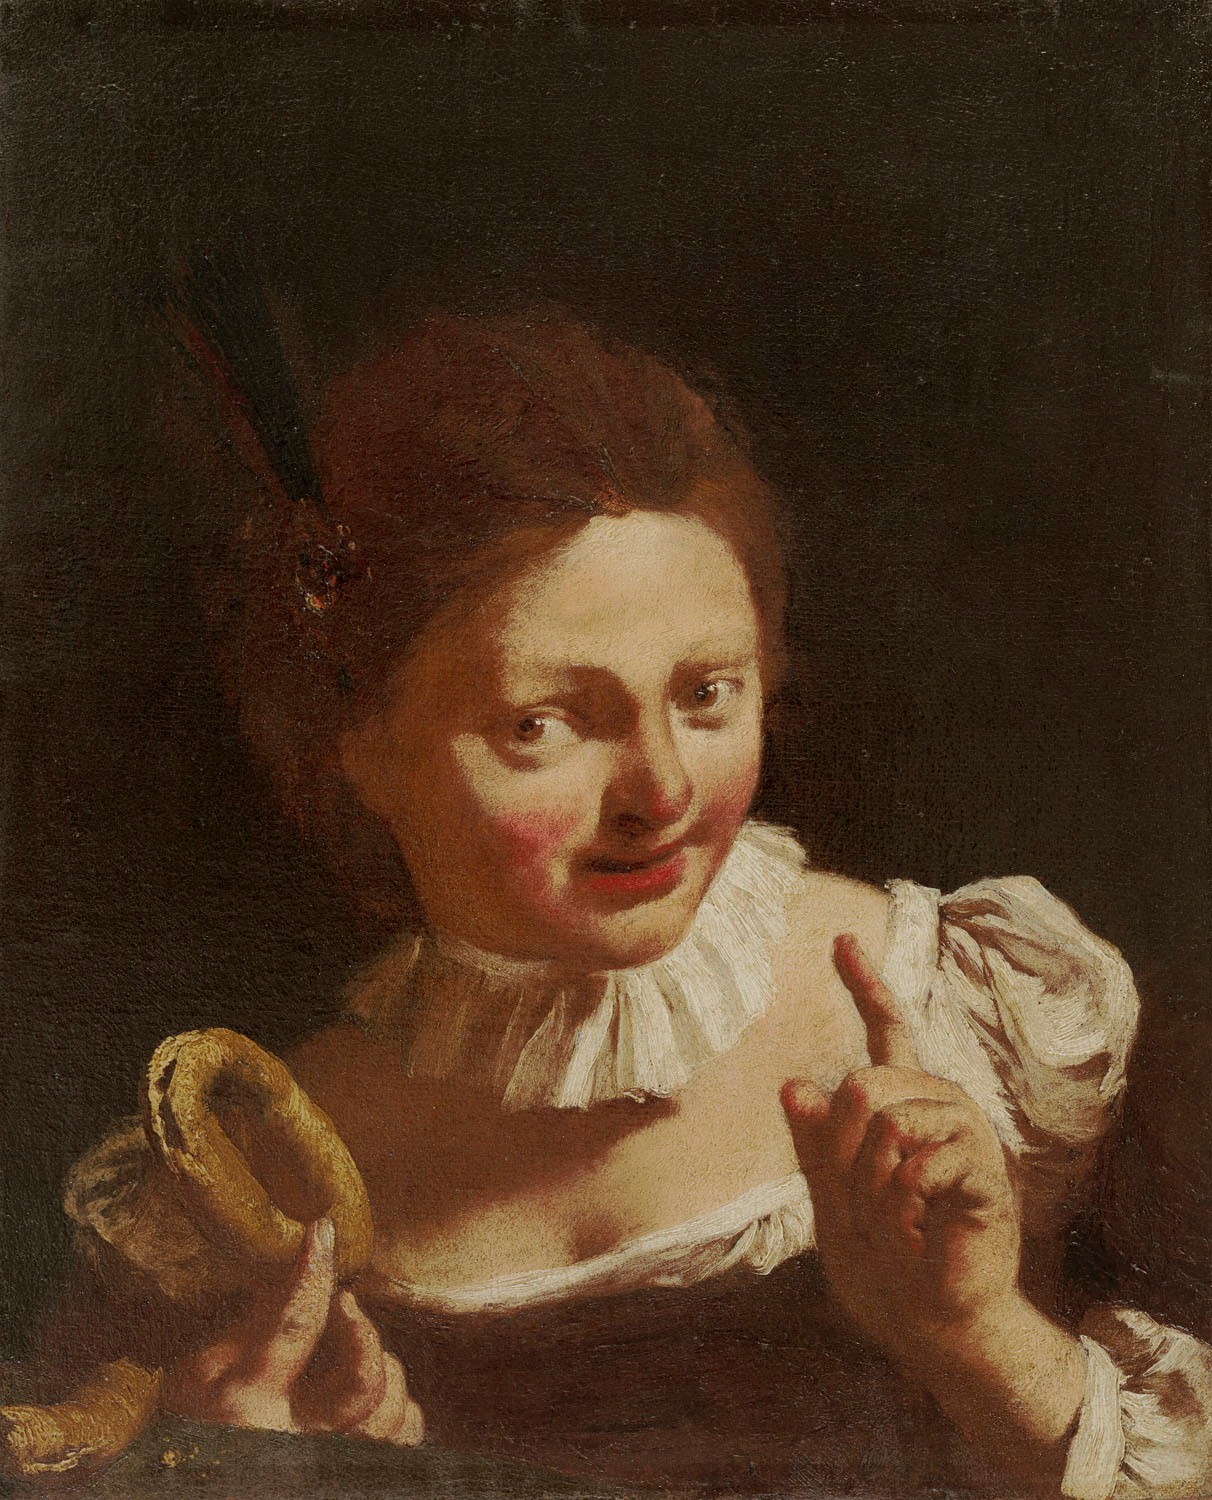 Piazzetta 1740 ca Girl with a ring biscuit wadsworth atheneum Hartford